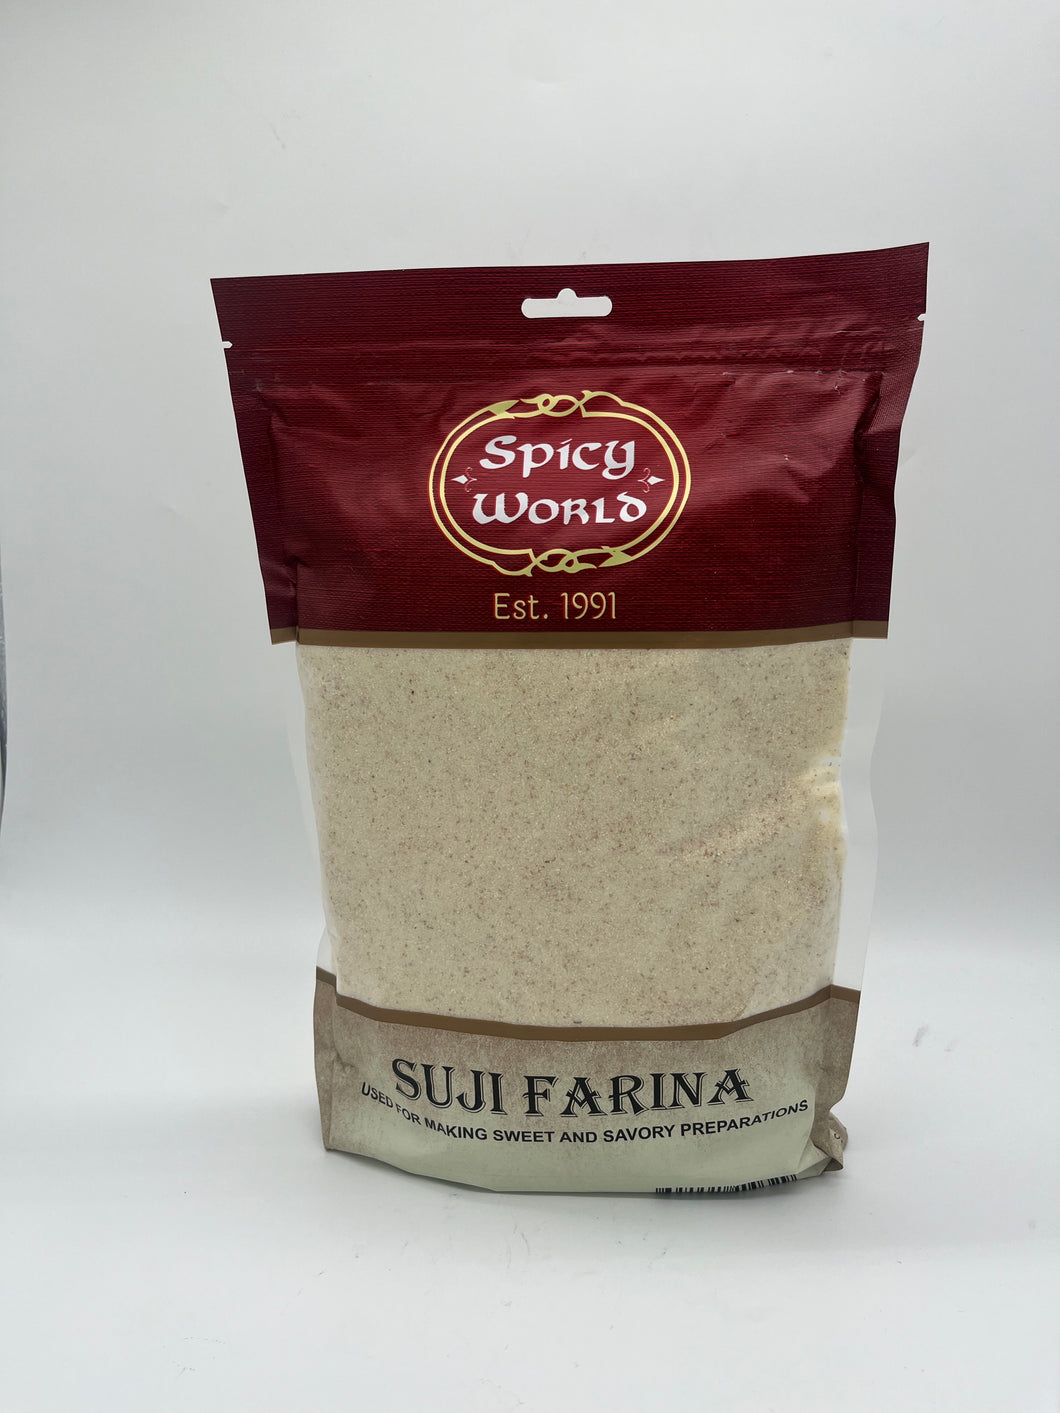 Suji Farina by Spicy World